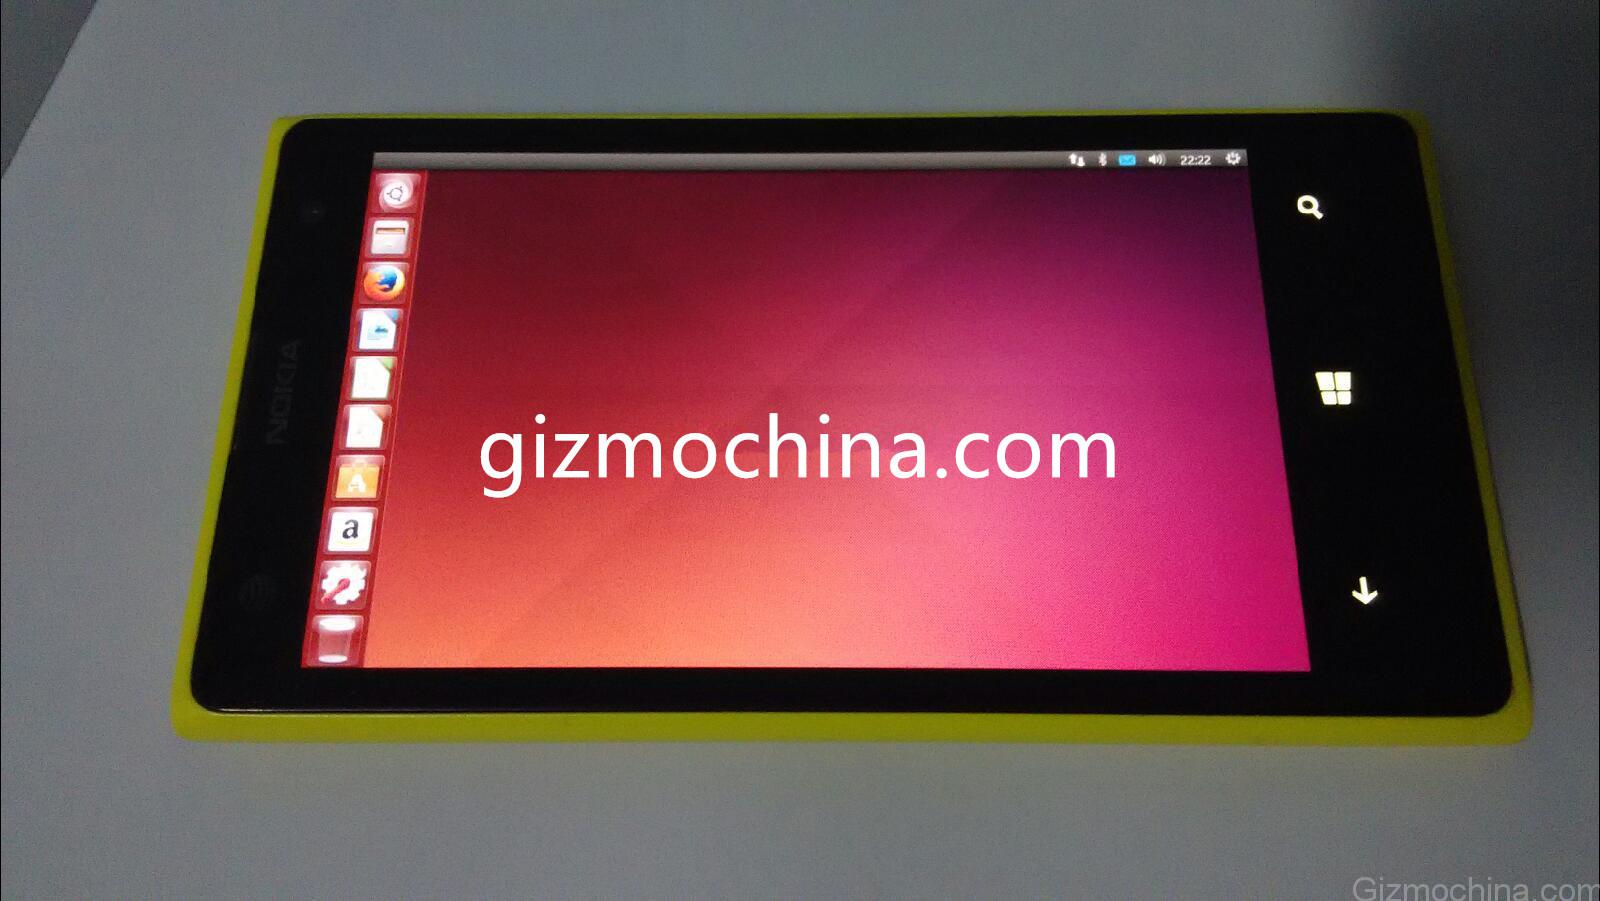 alt="Ubuntu on Lumia 1020"